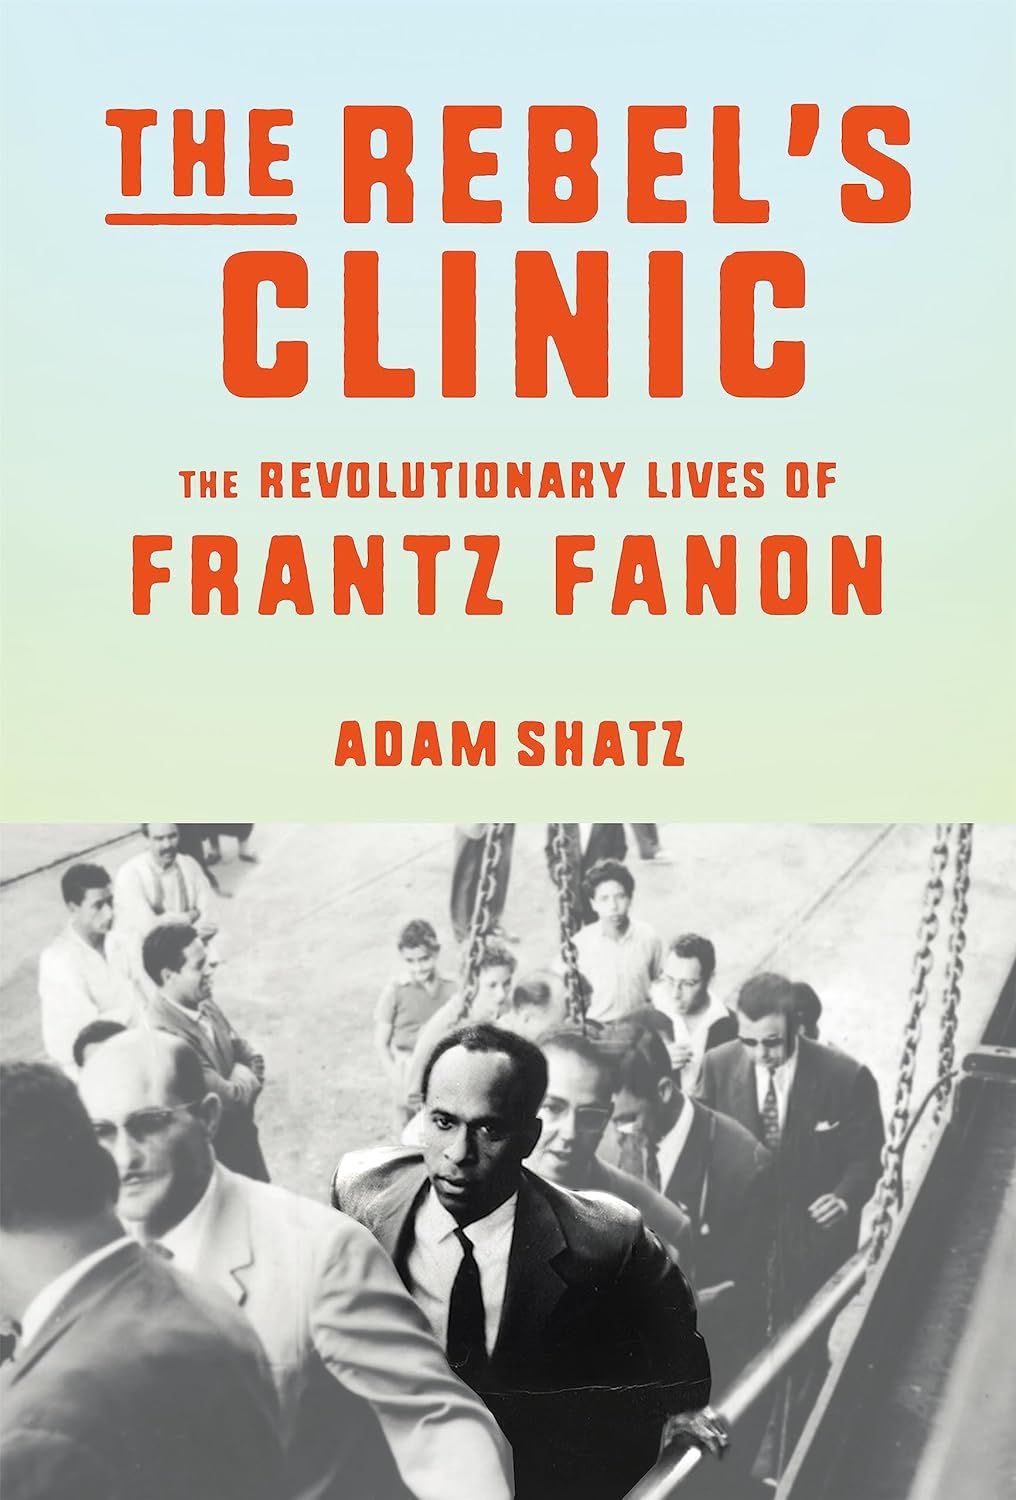 Ambivalent Fanonism: On Adam Shatz’s “The Rebel’s Clinic”